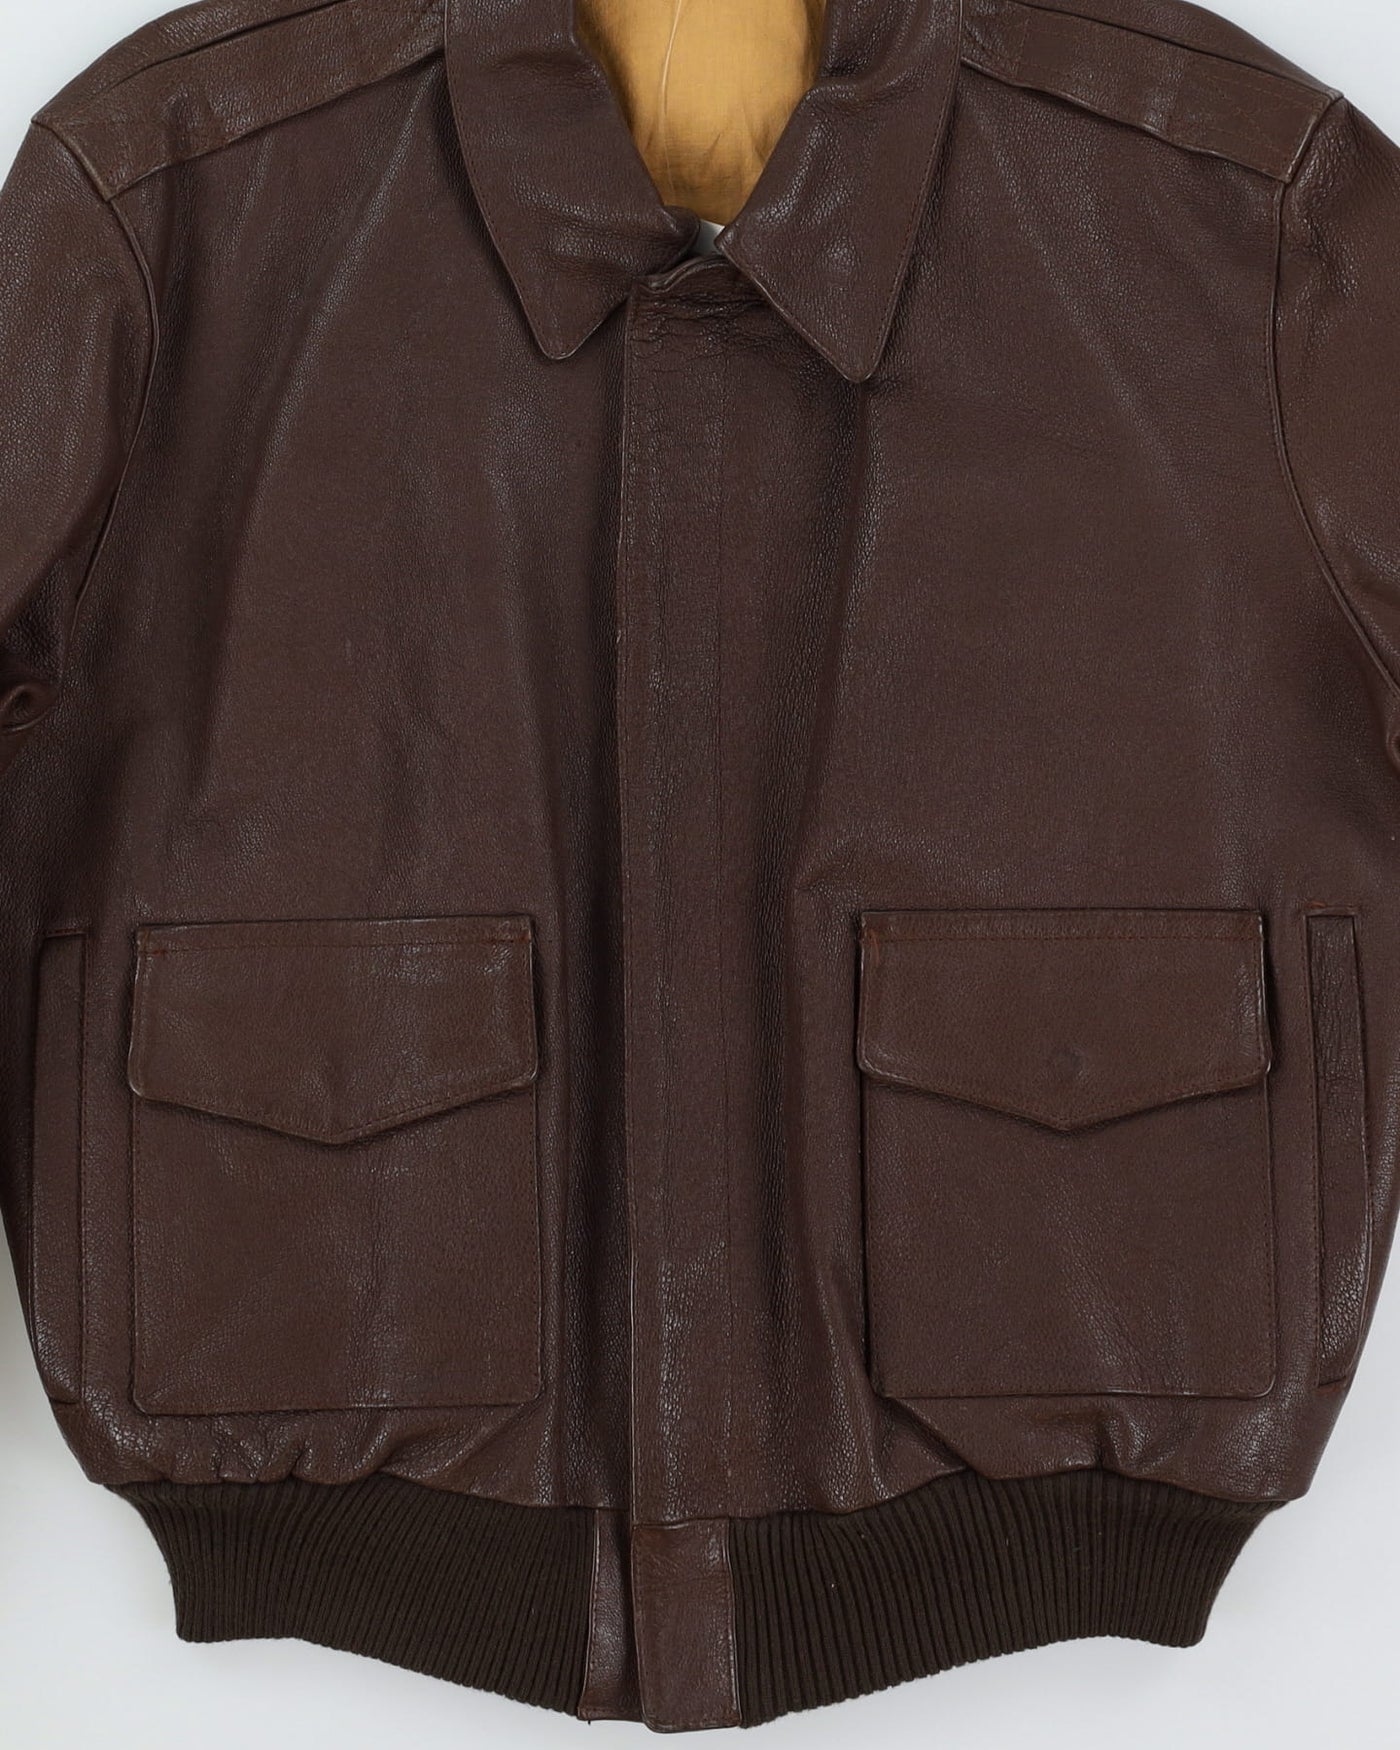 Bespoke Leather A2 Style Flight Jacket - M / L